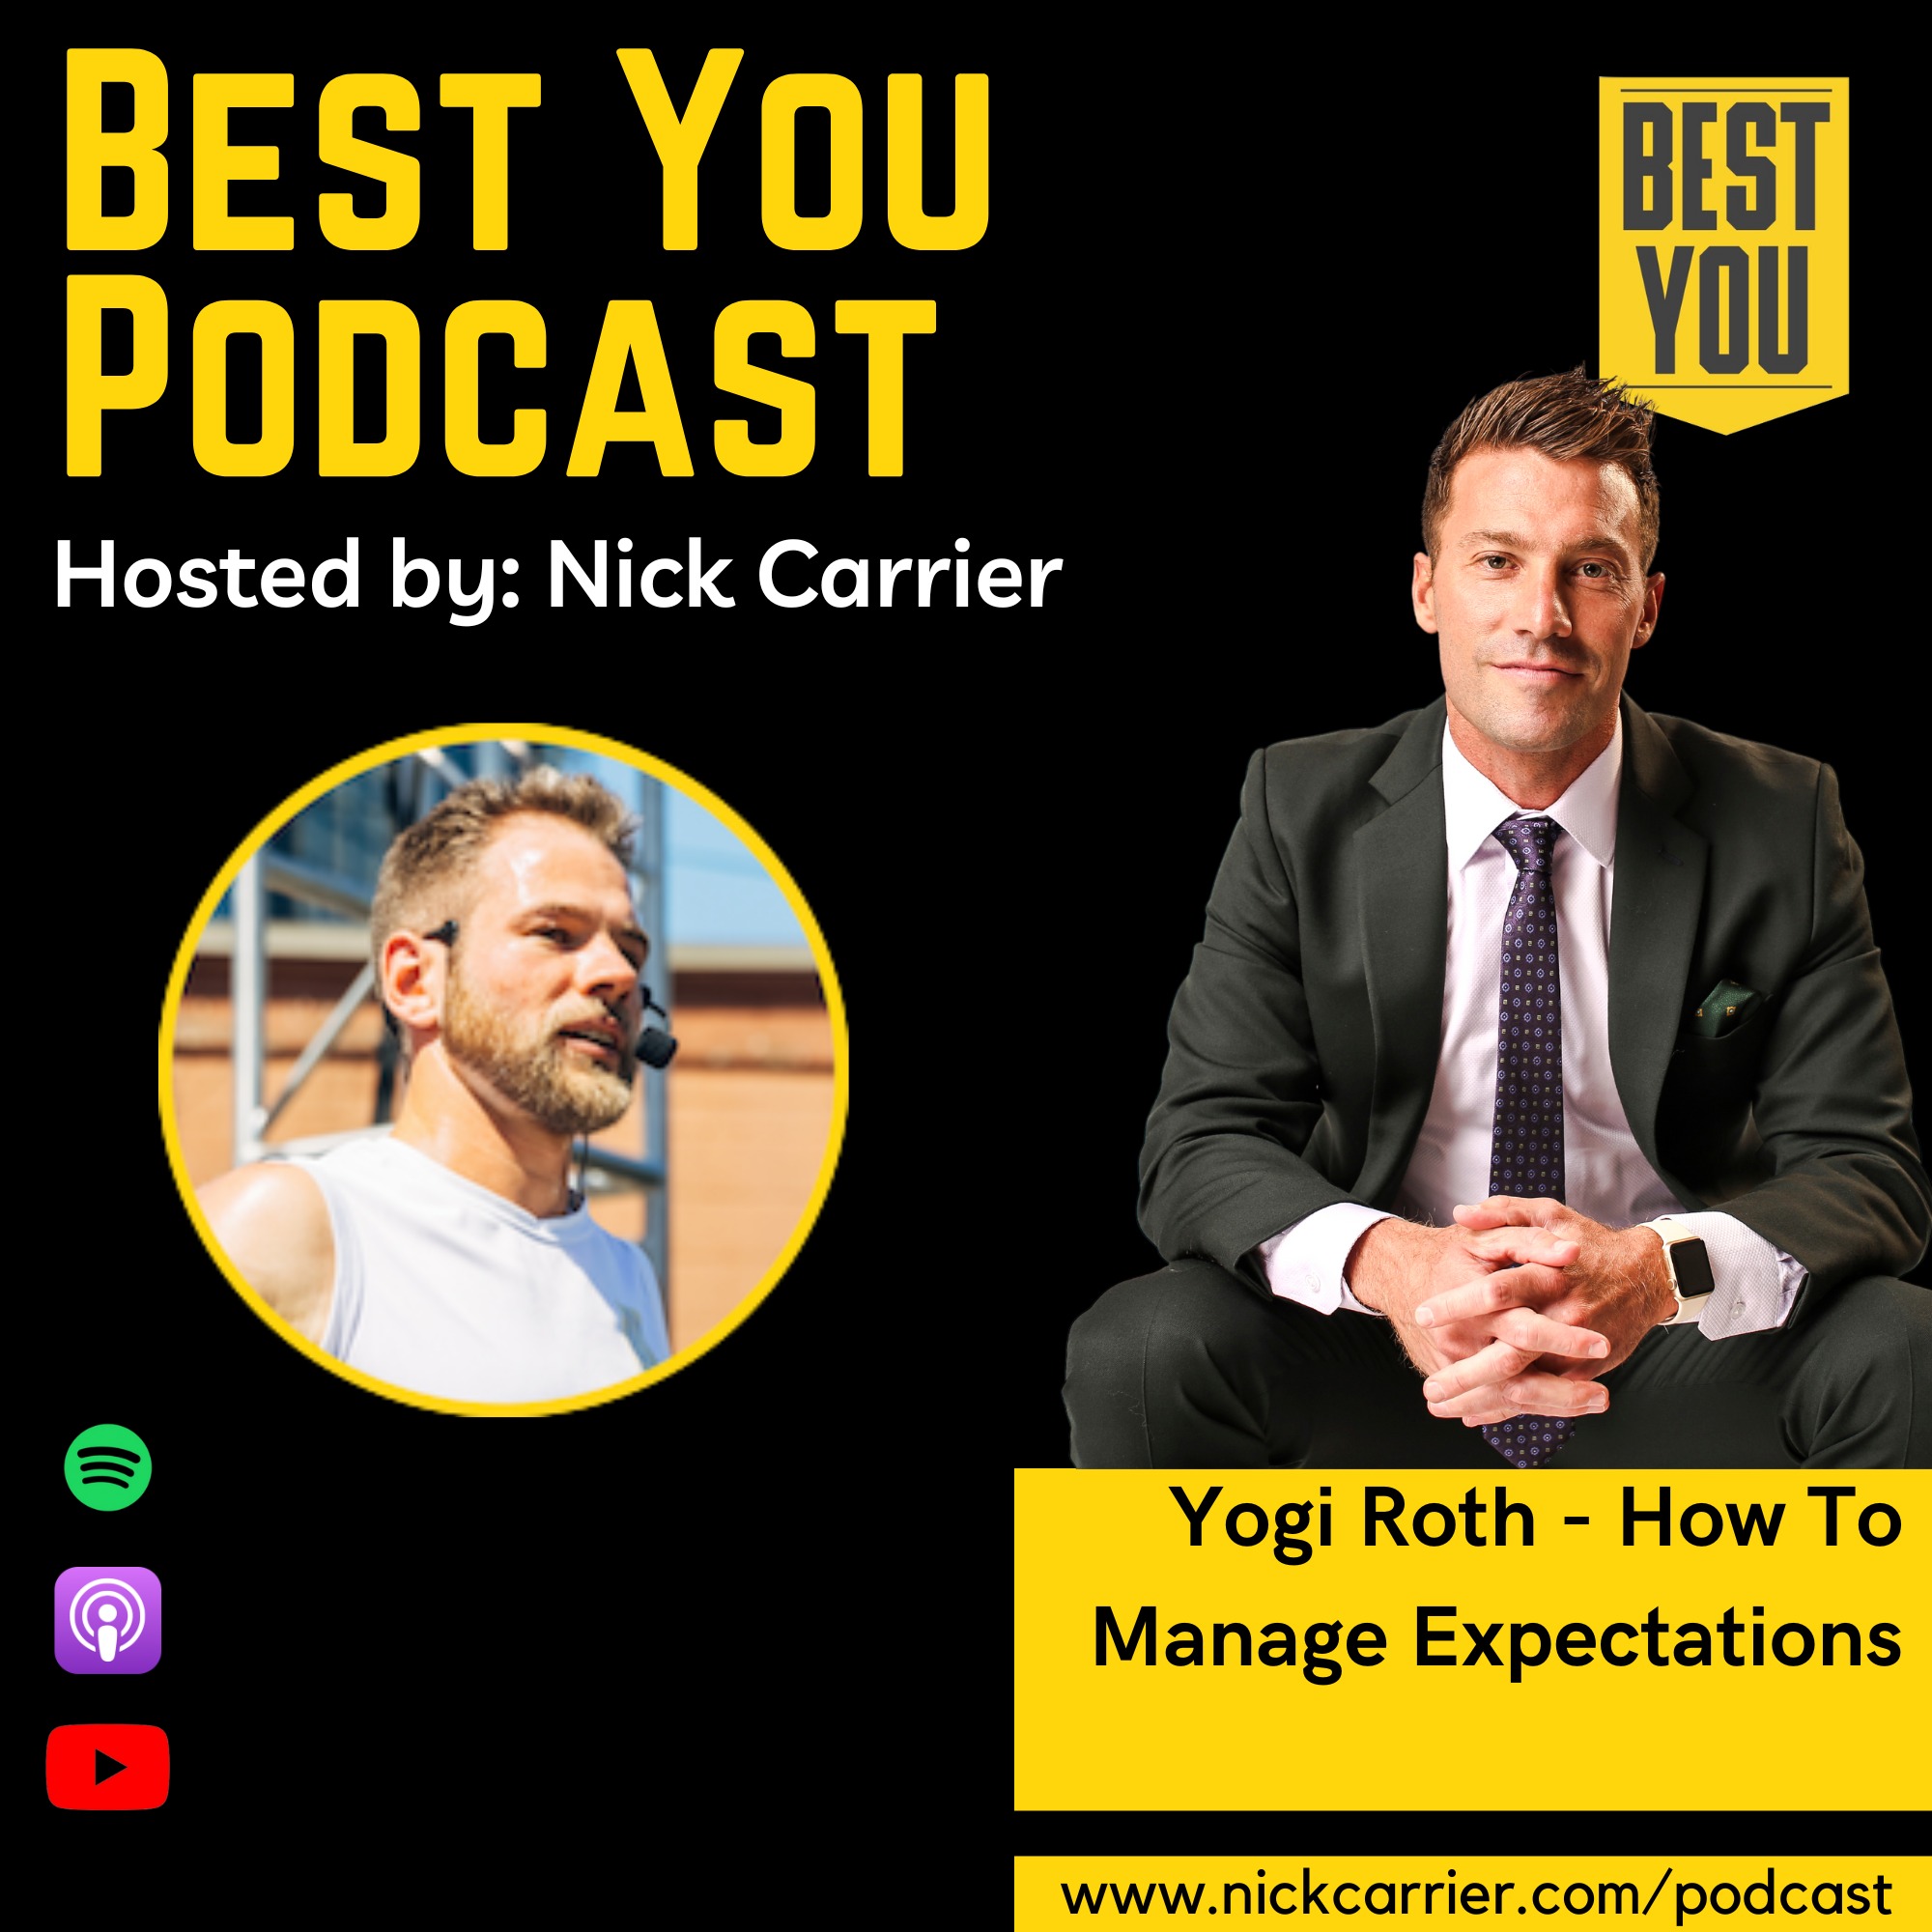 Yogi Roth - How To Manage Expectations